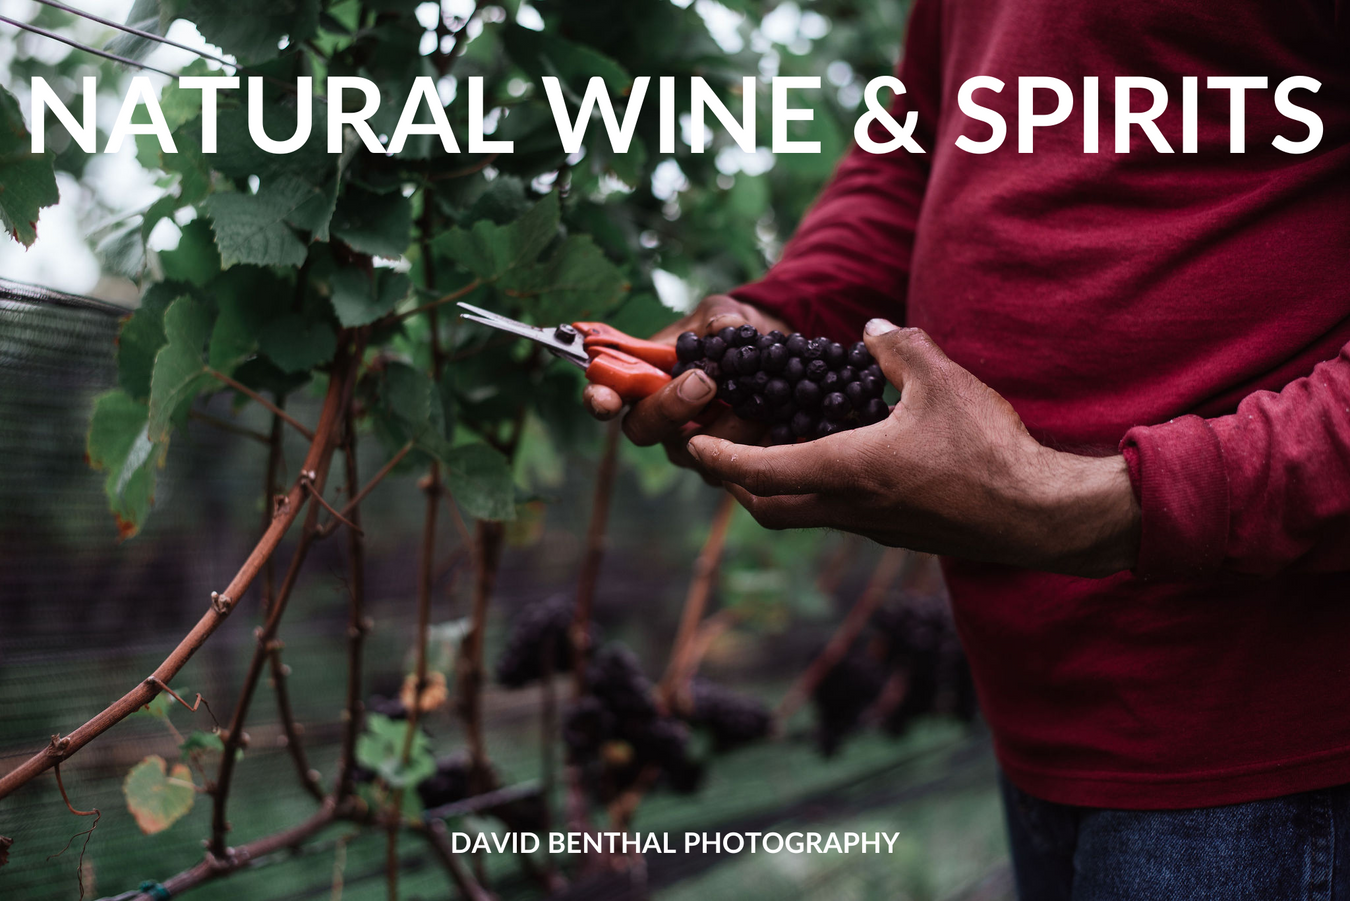 Wine and Spirits - Natural